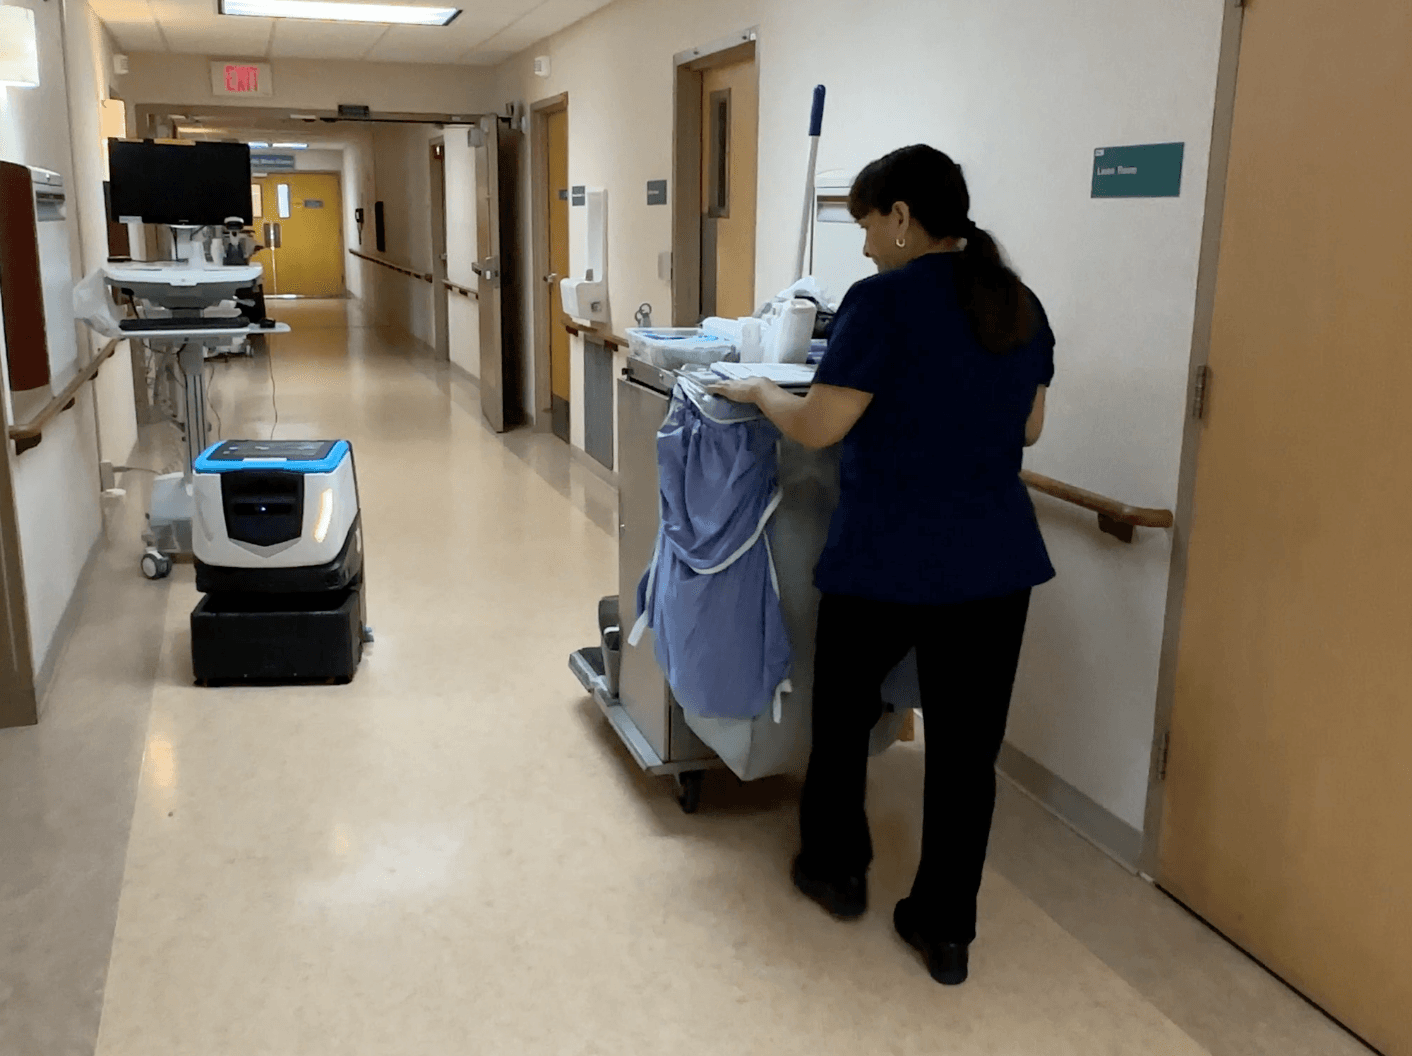 Cobi 18, robotic floor scrubber, cleaning hallway in healthcare facility